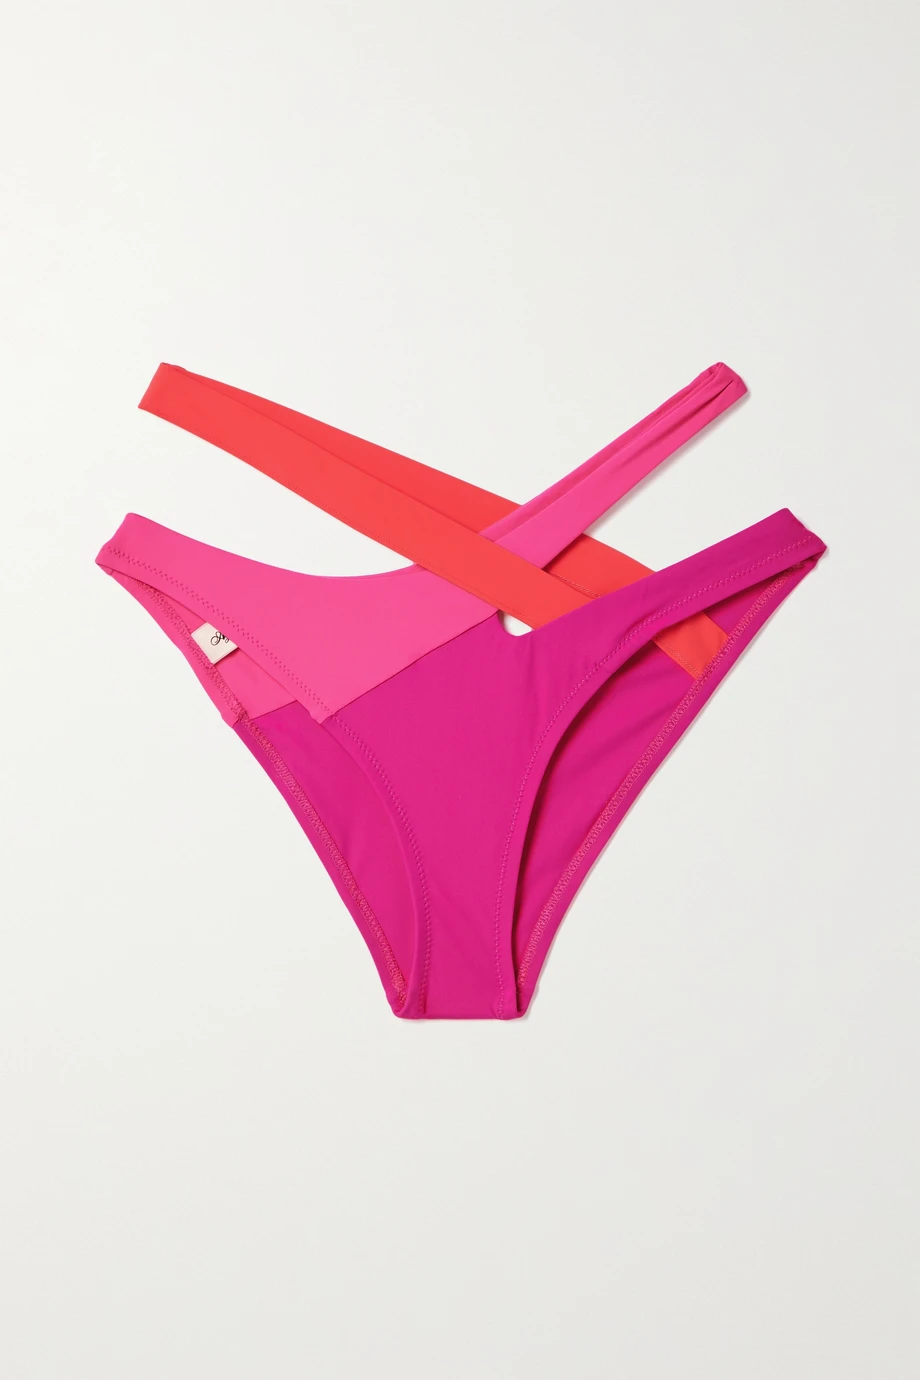 agent provacateur clothing bikini bottoms izaro cutout color block